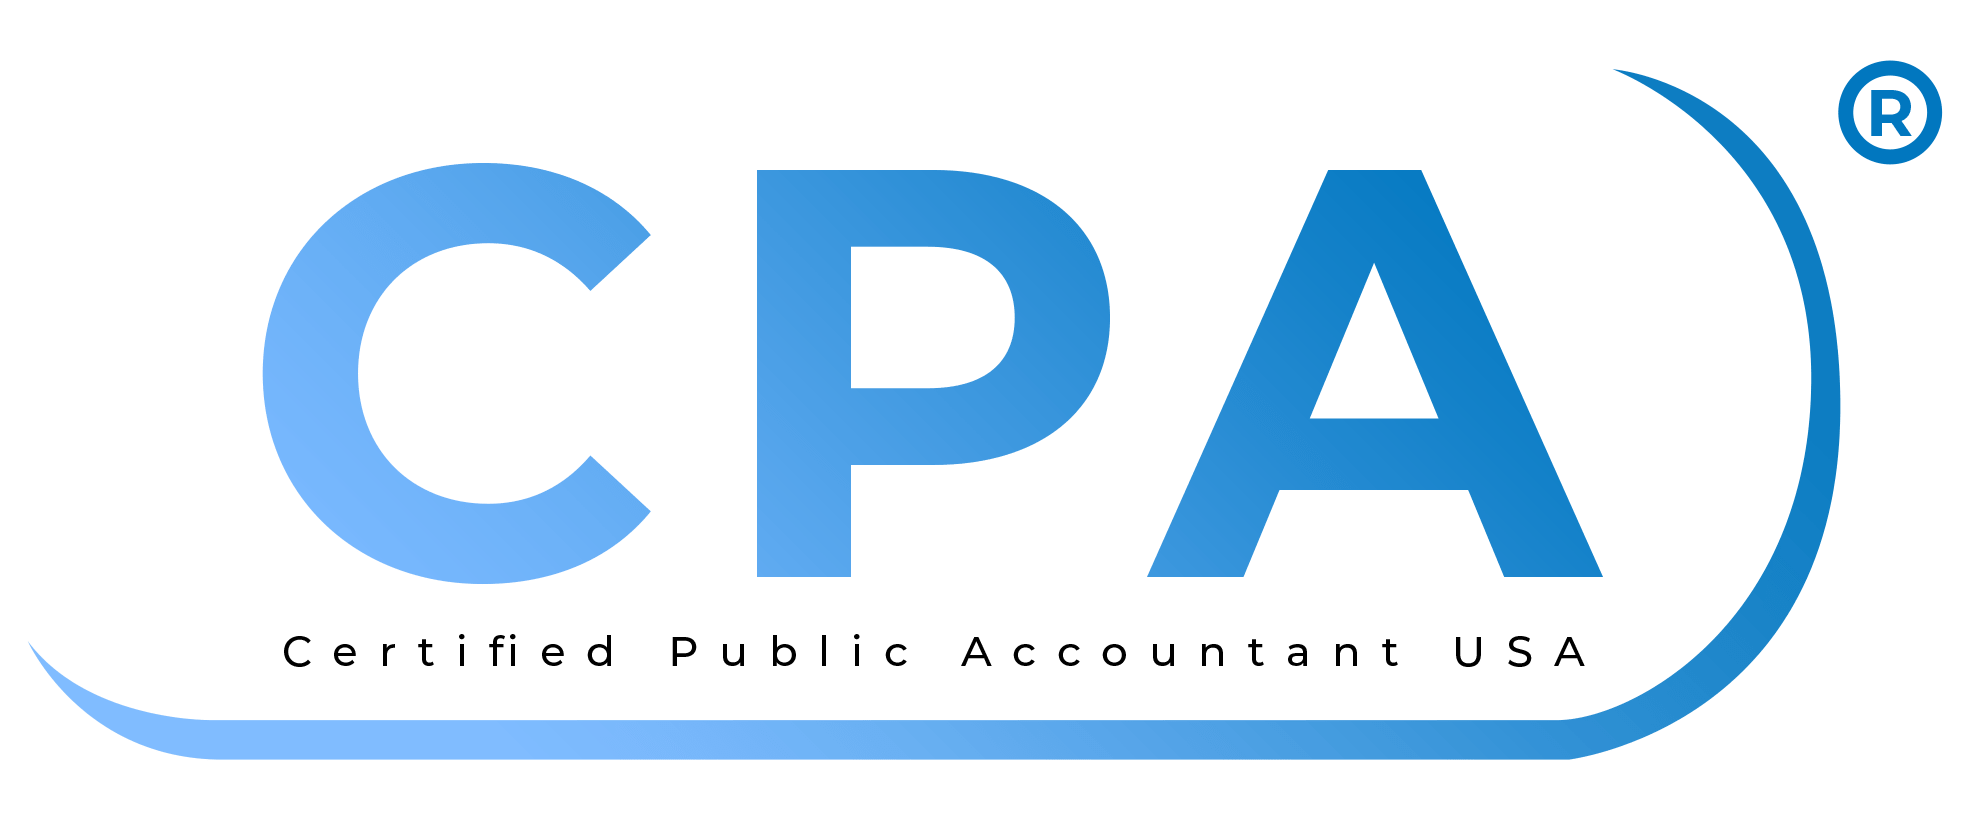 Certified Public Accountant - USA